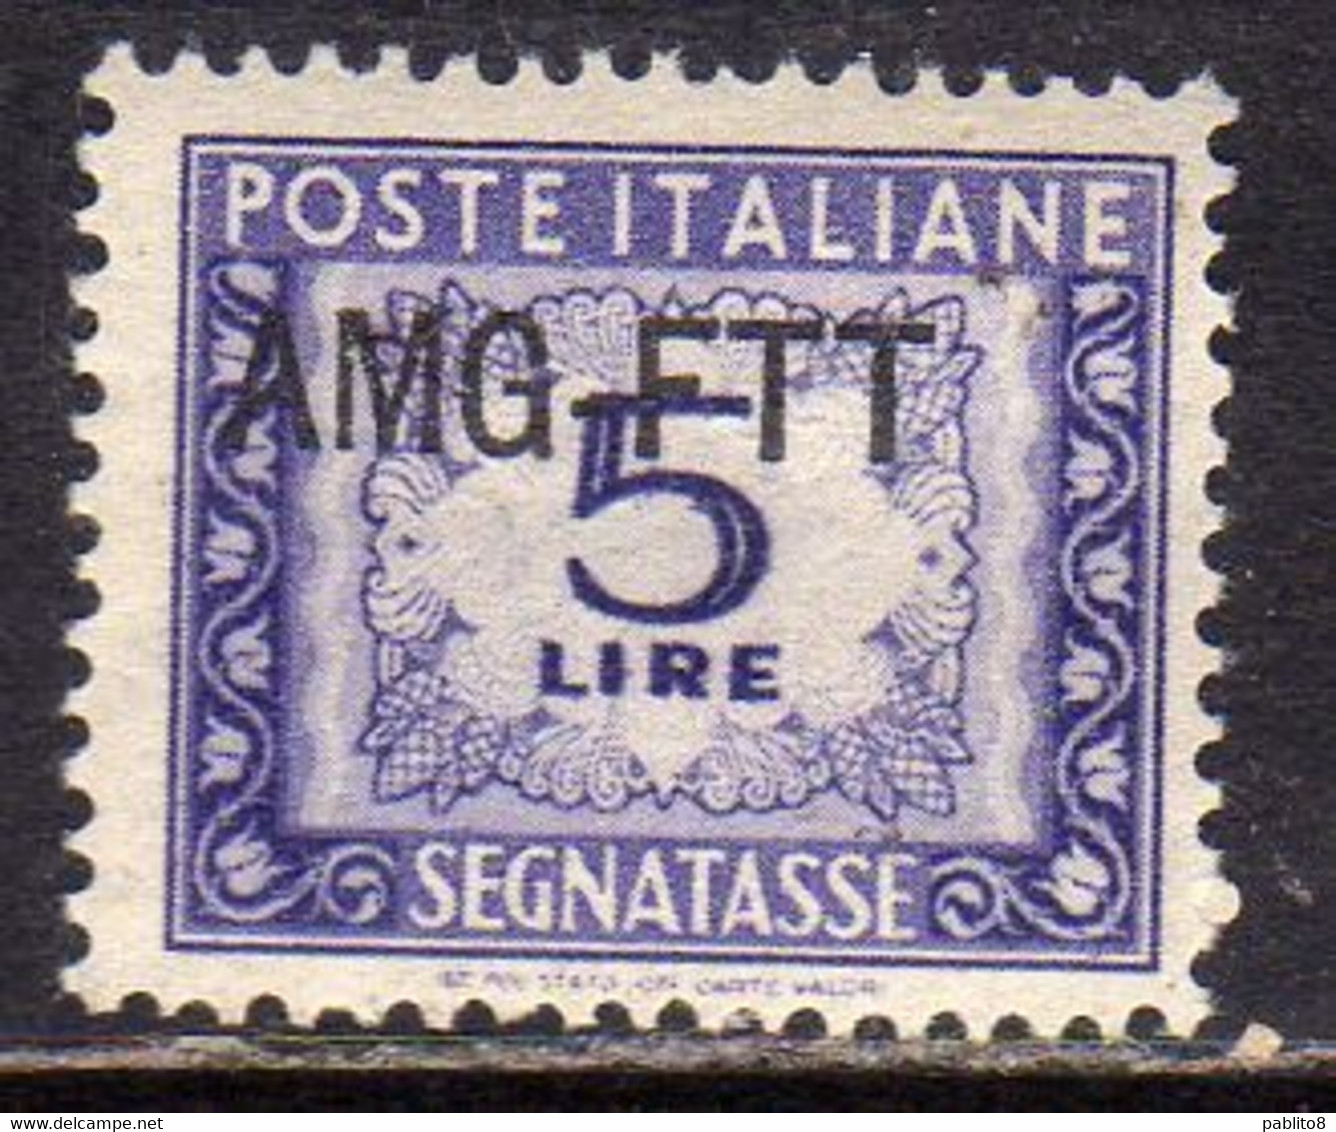 TRIESTE A 1949 1954 VARIETÀ VARIETY AMG-FTT SOPRASTAMPATO D'ITALIA ITALY SEGNATASSE POSTAGE DUE TAXES TASSE LIRE 5 MNH - Strafport